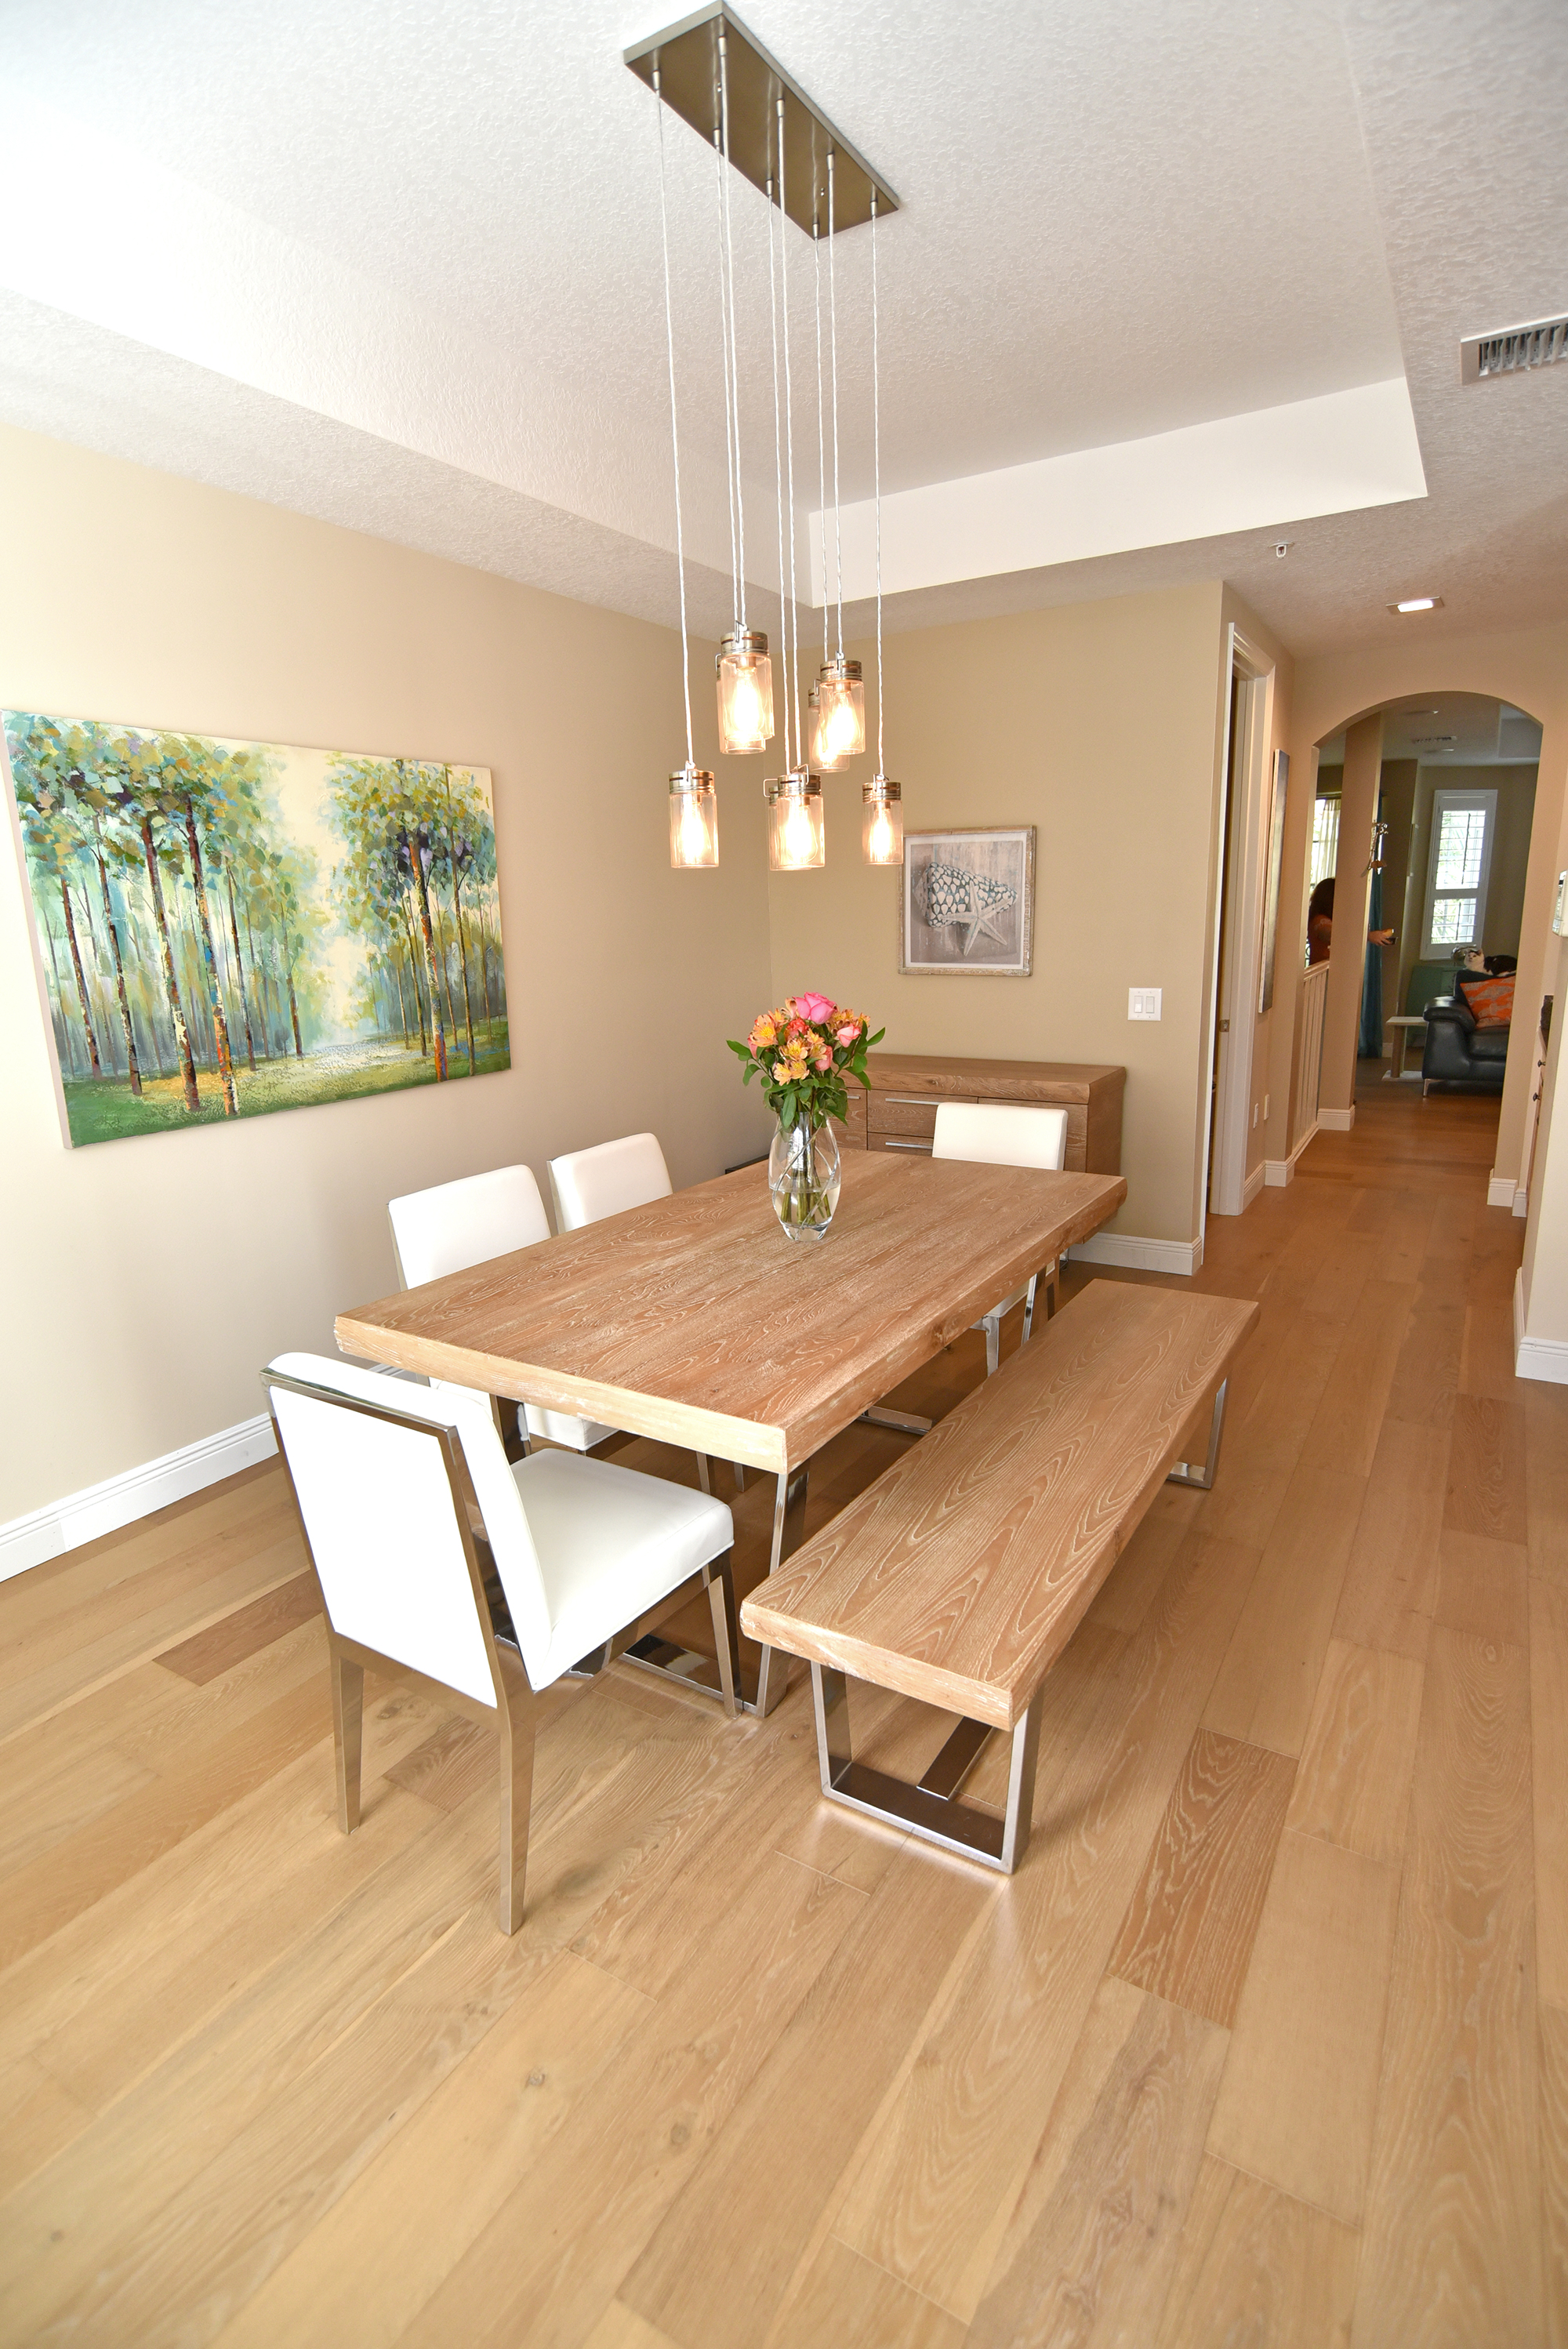 wood-floor-dining-room-by-Hooked-on-Hardwood.jpg